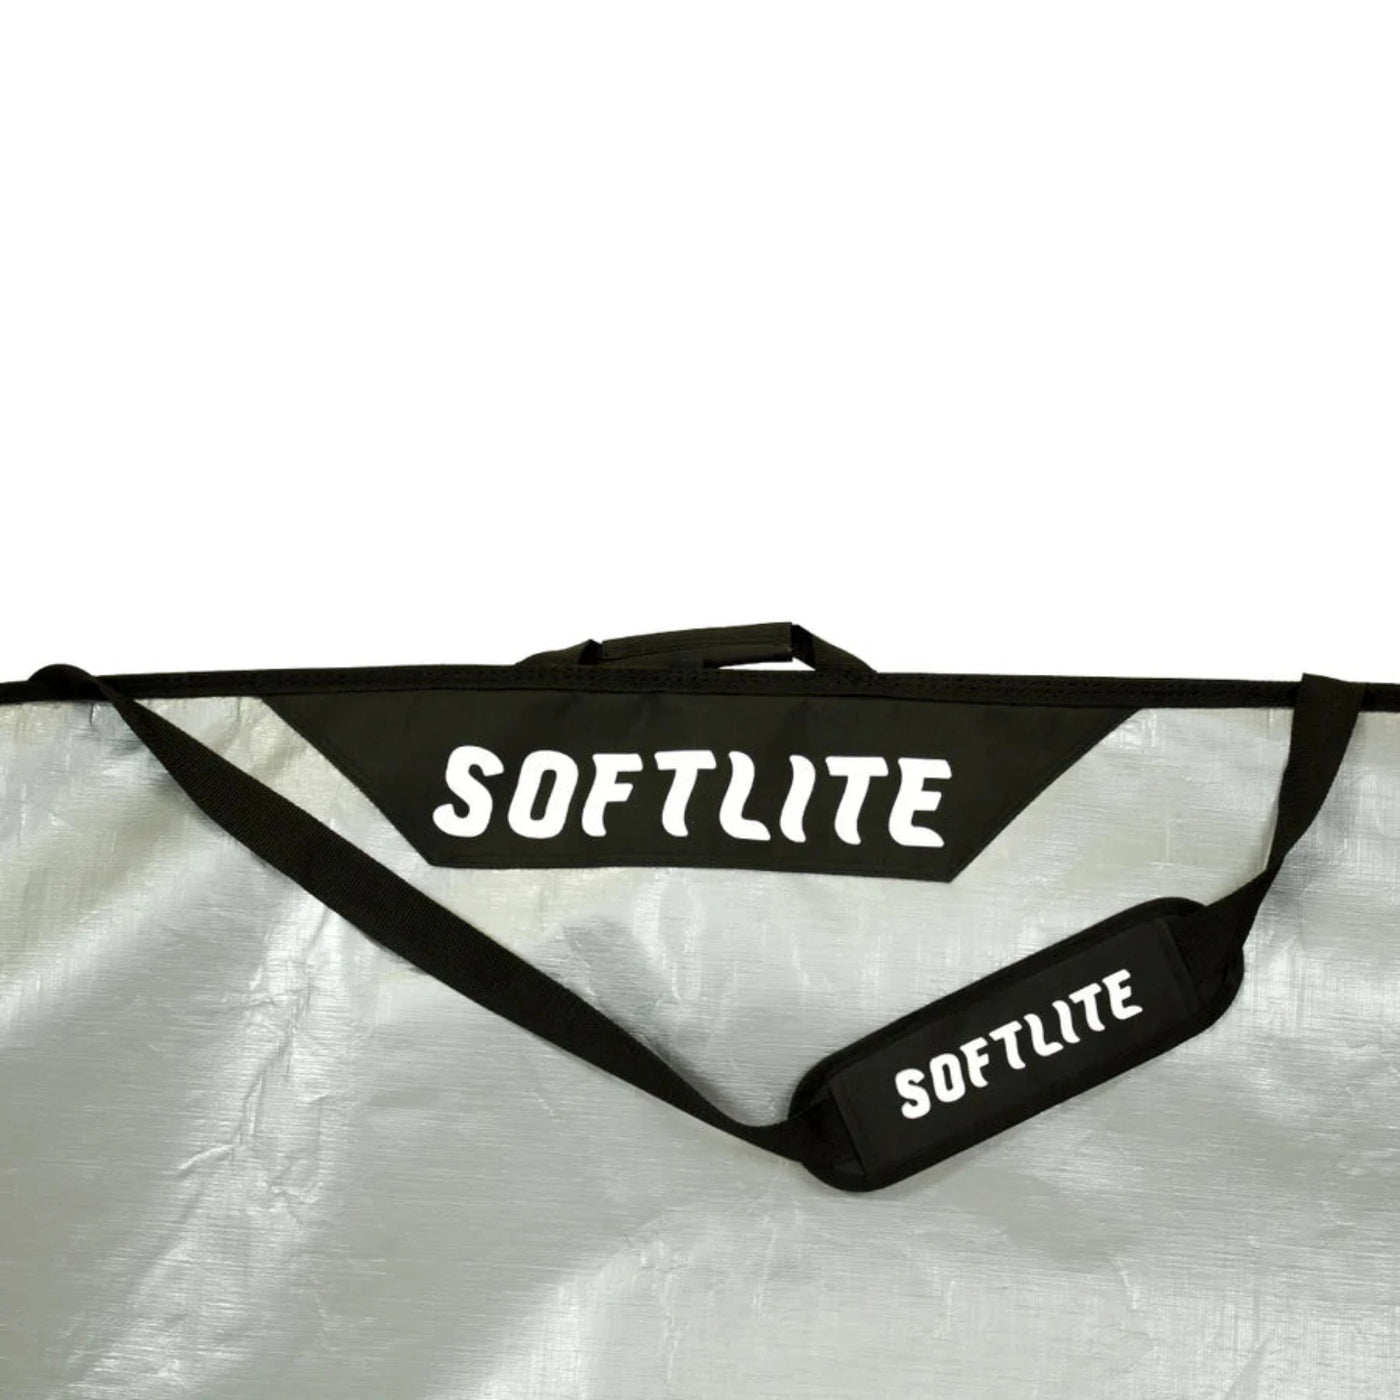 Softlite Softboard  Cover 8'0"